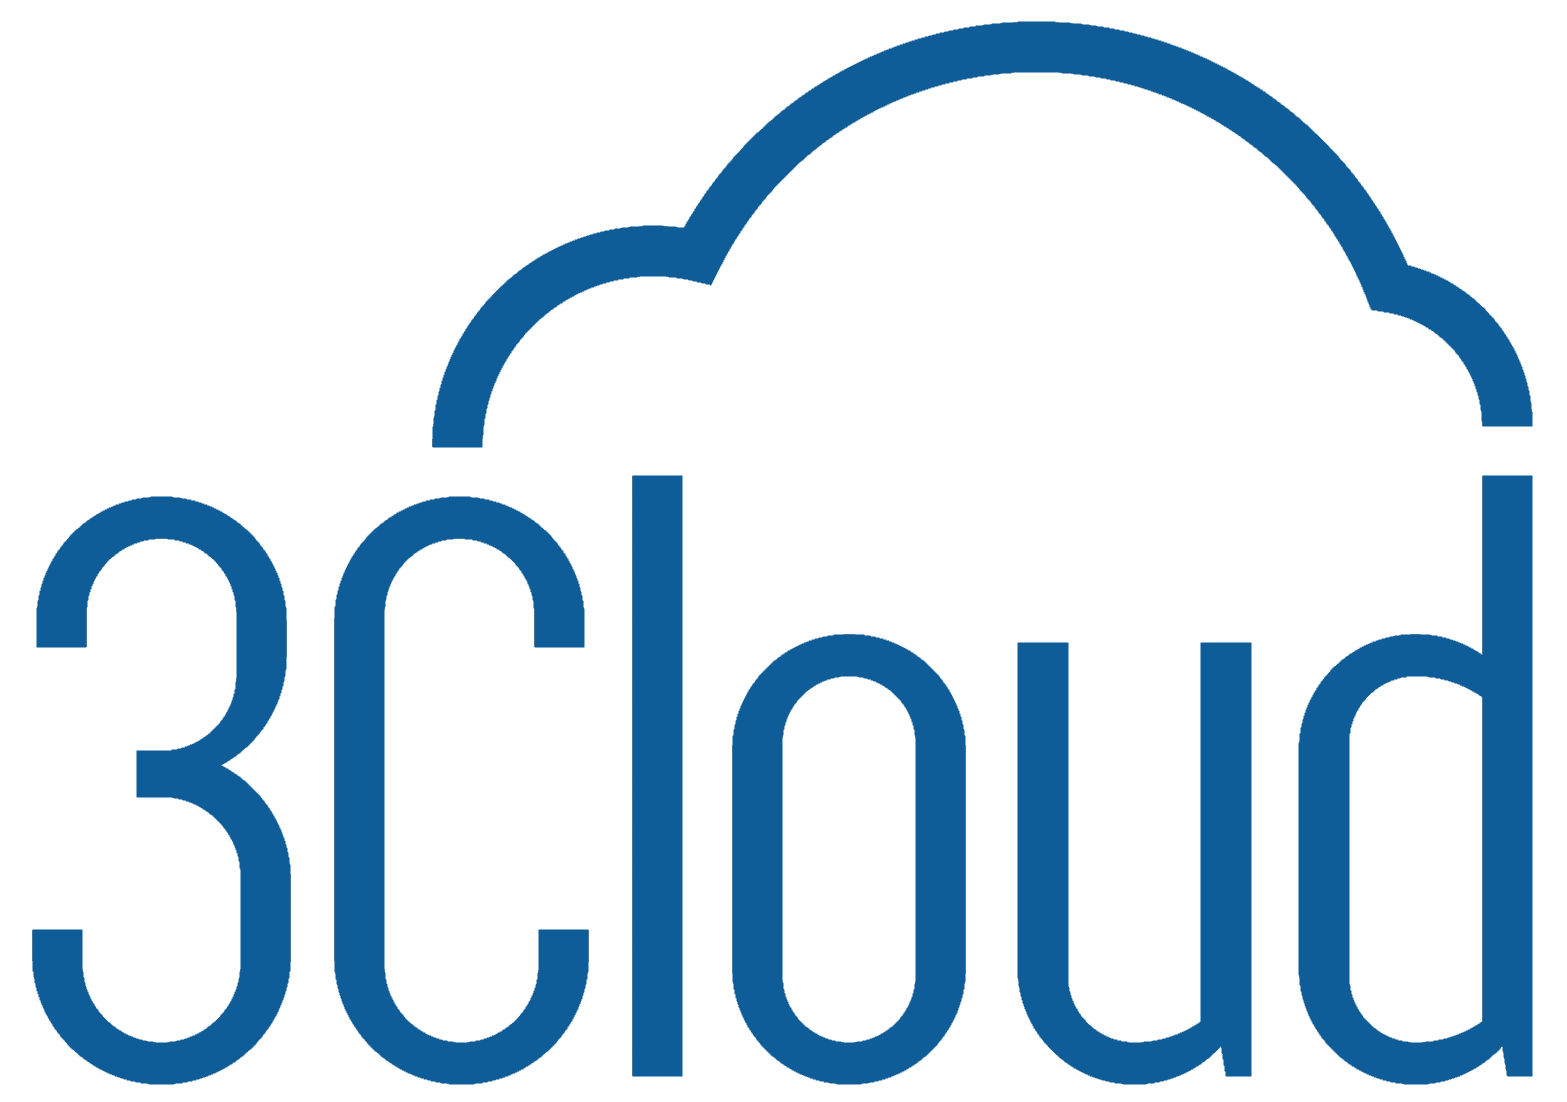 3Cloud logo